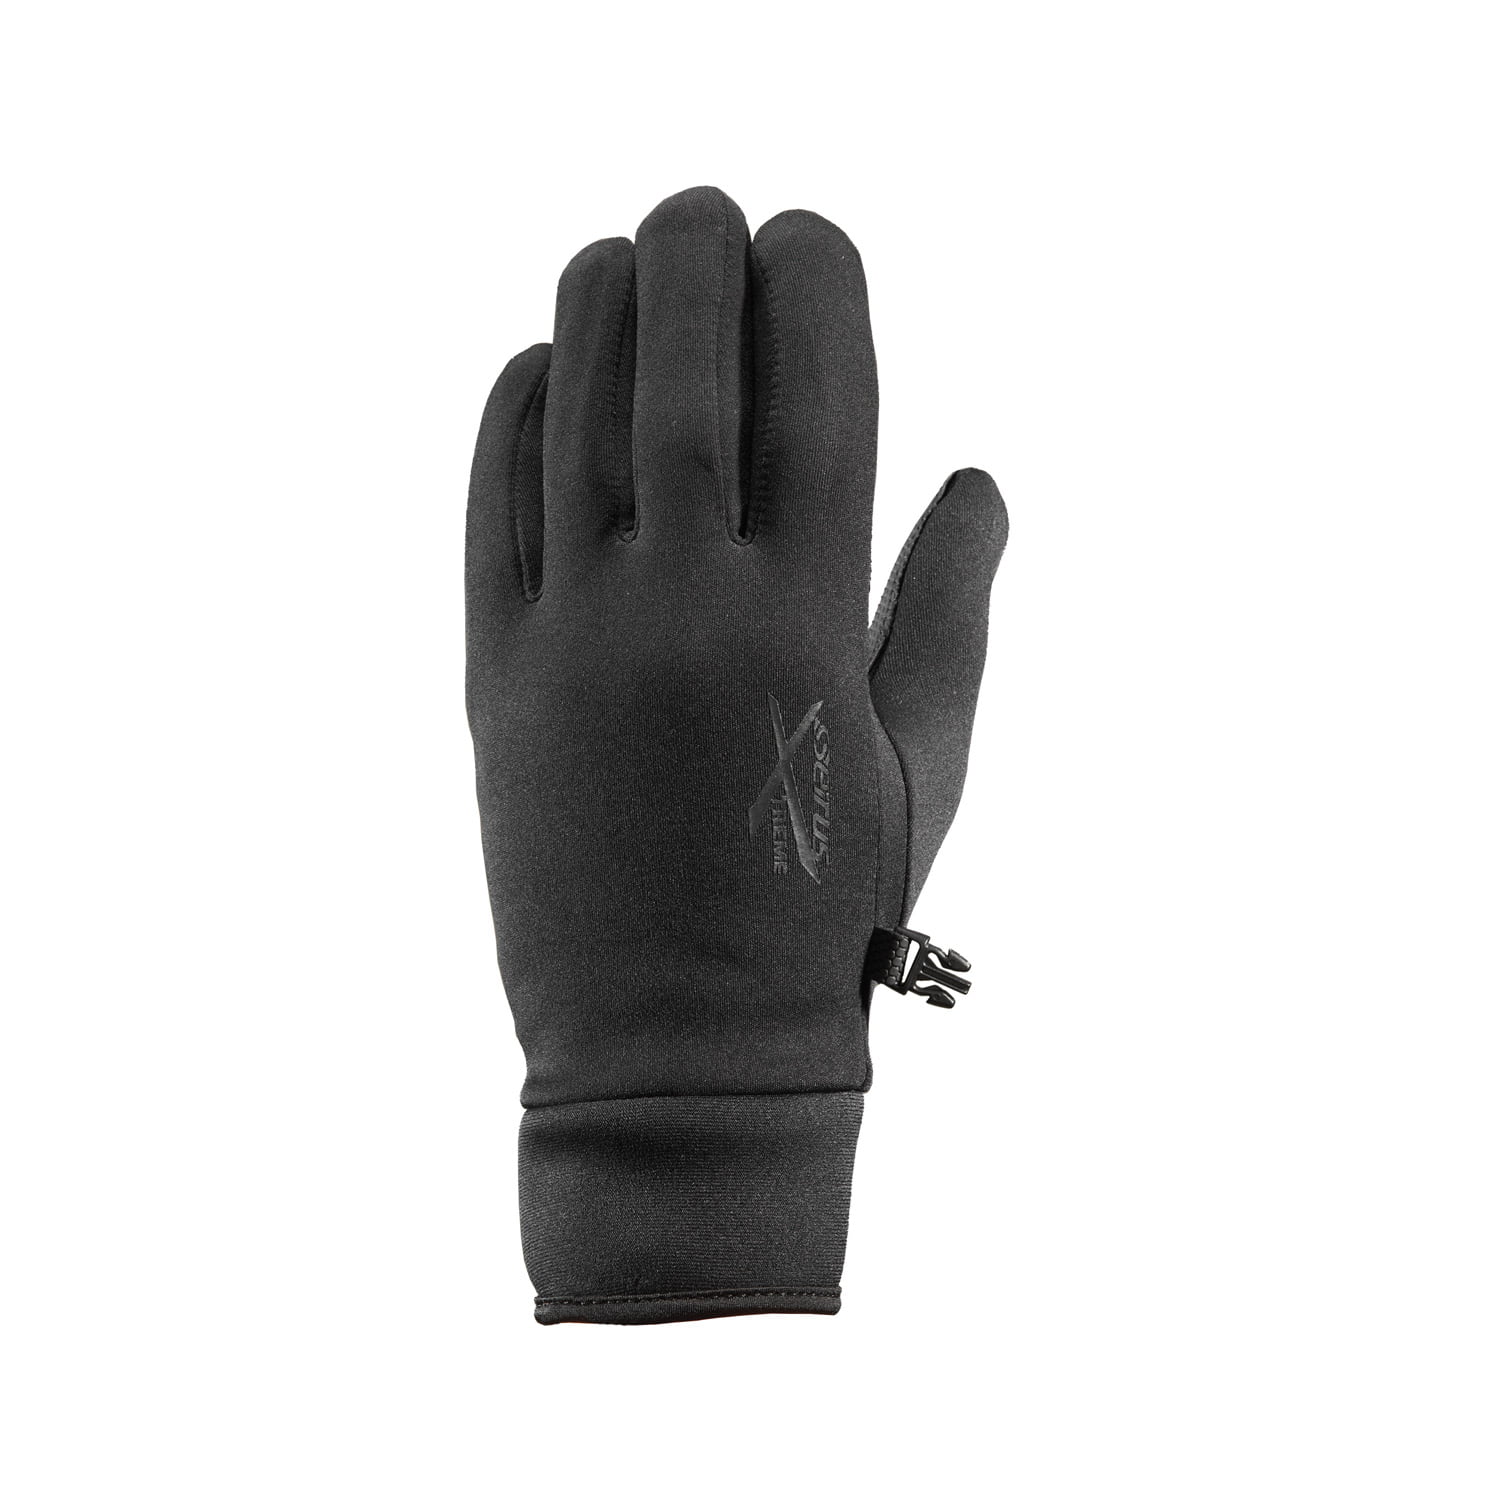 Seirus Innovation Women's Xtreme All Weather Lightweight Waterproof Gloves 